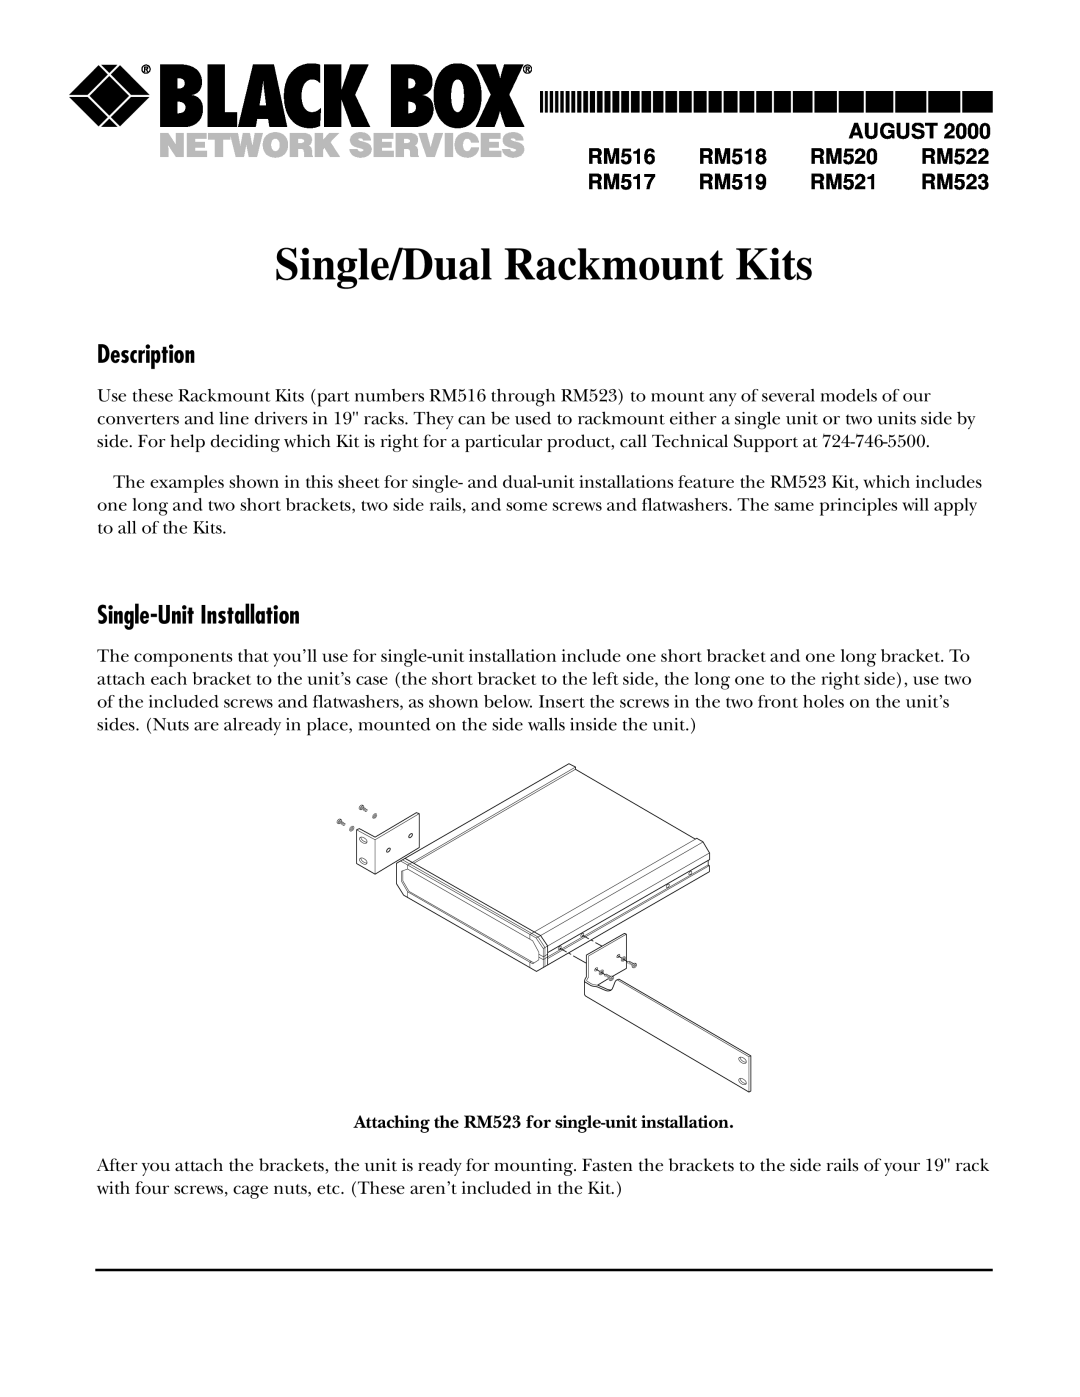 Black Box RM522, RM521 manual Description, Single-Unit Installation, Attaching the RM523 for single-unit installation 